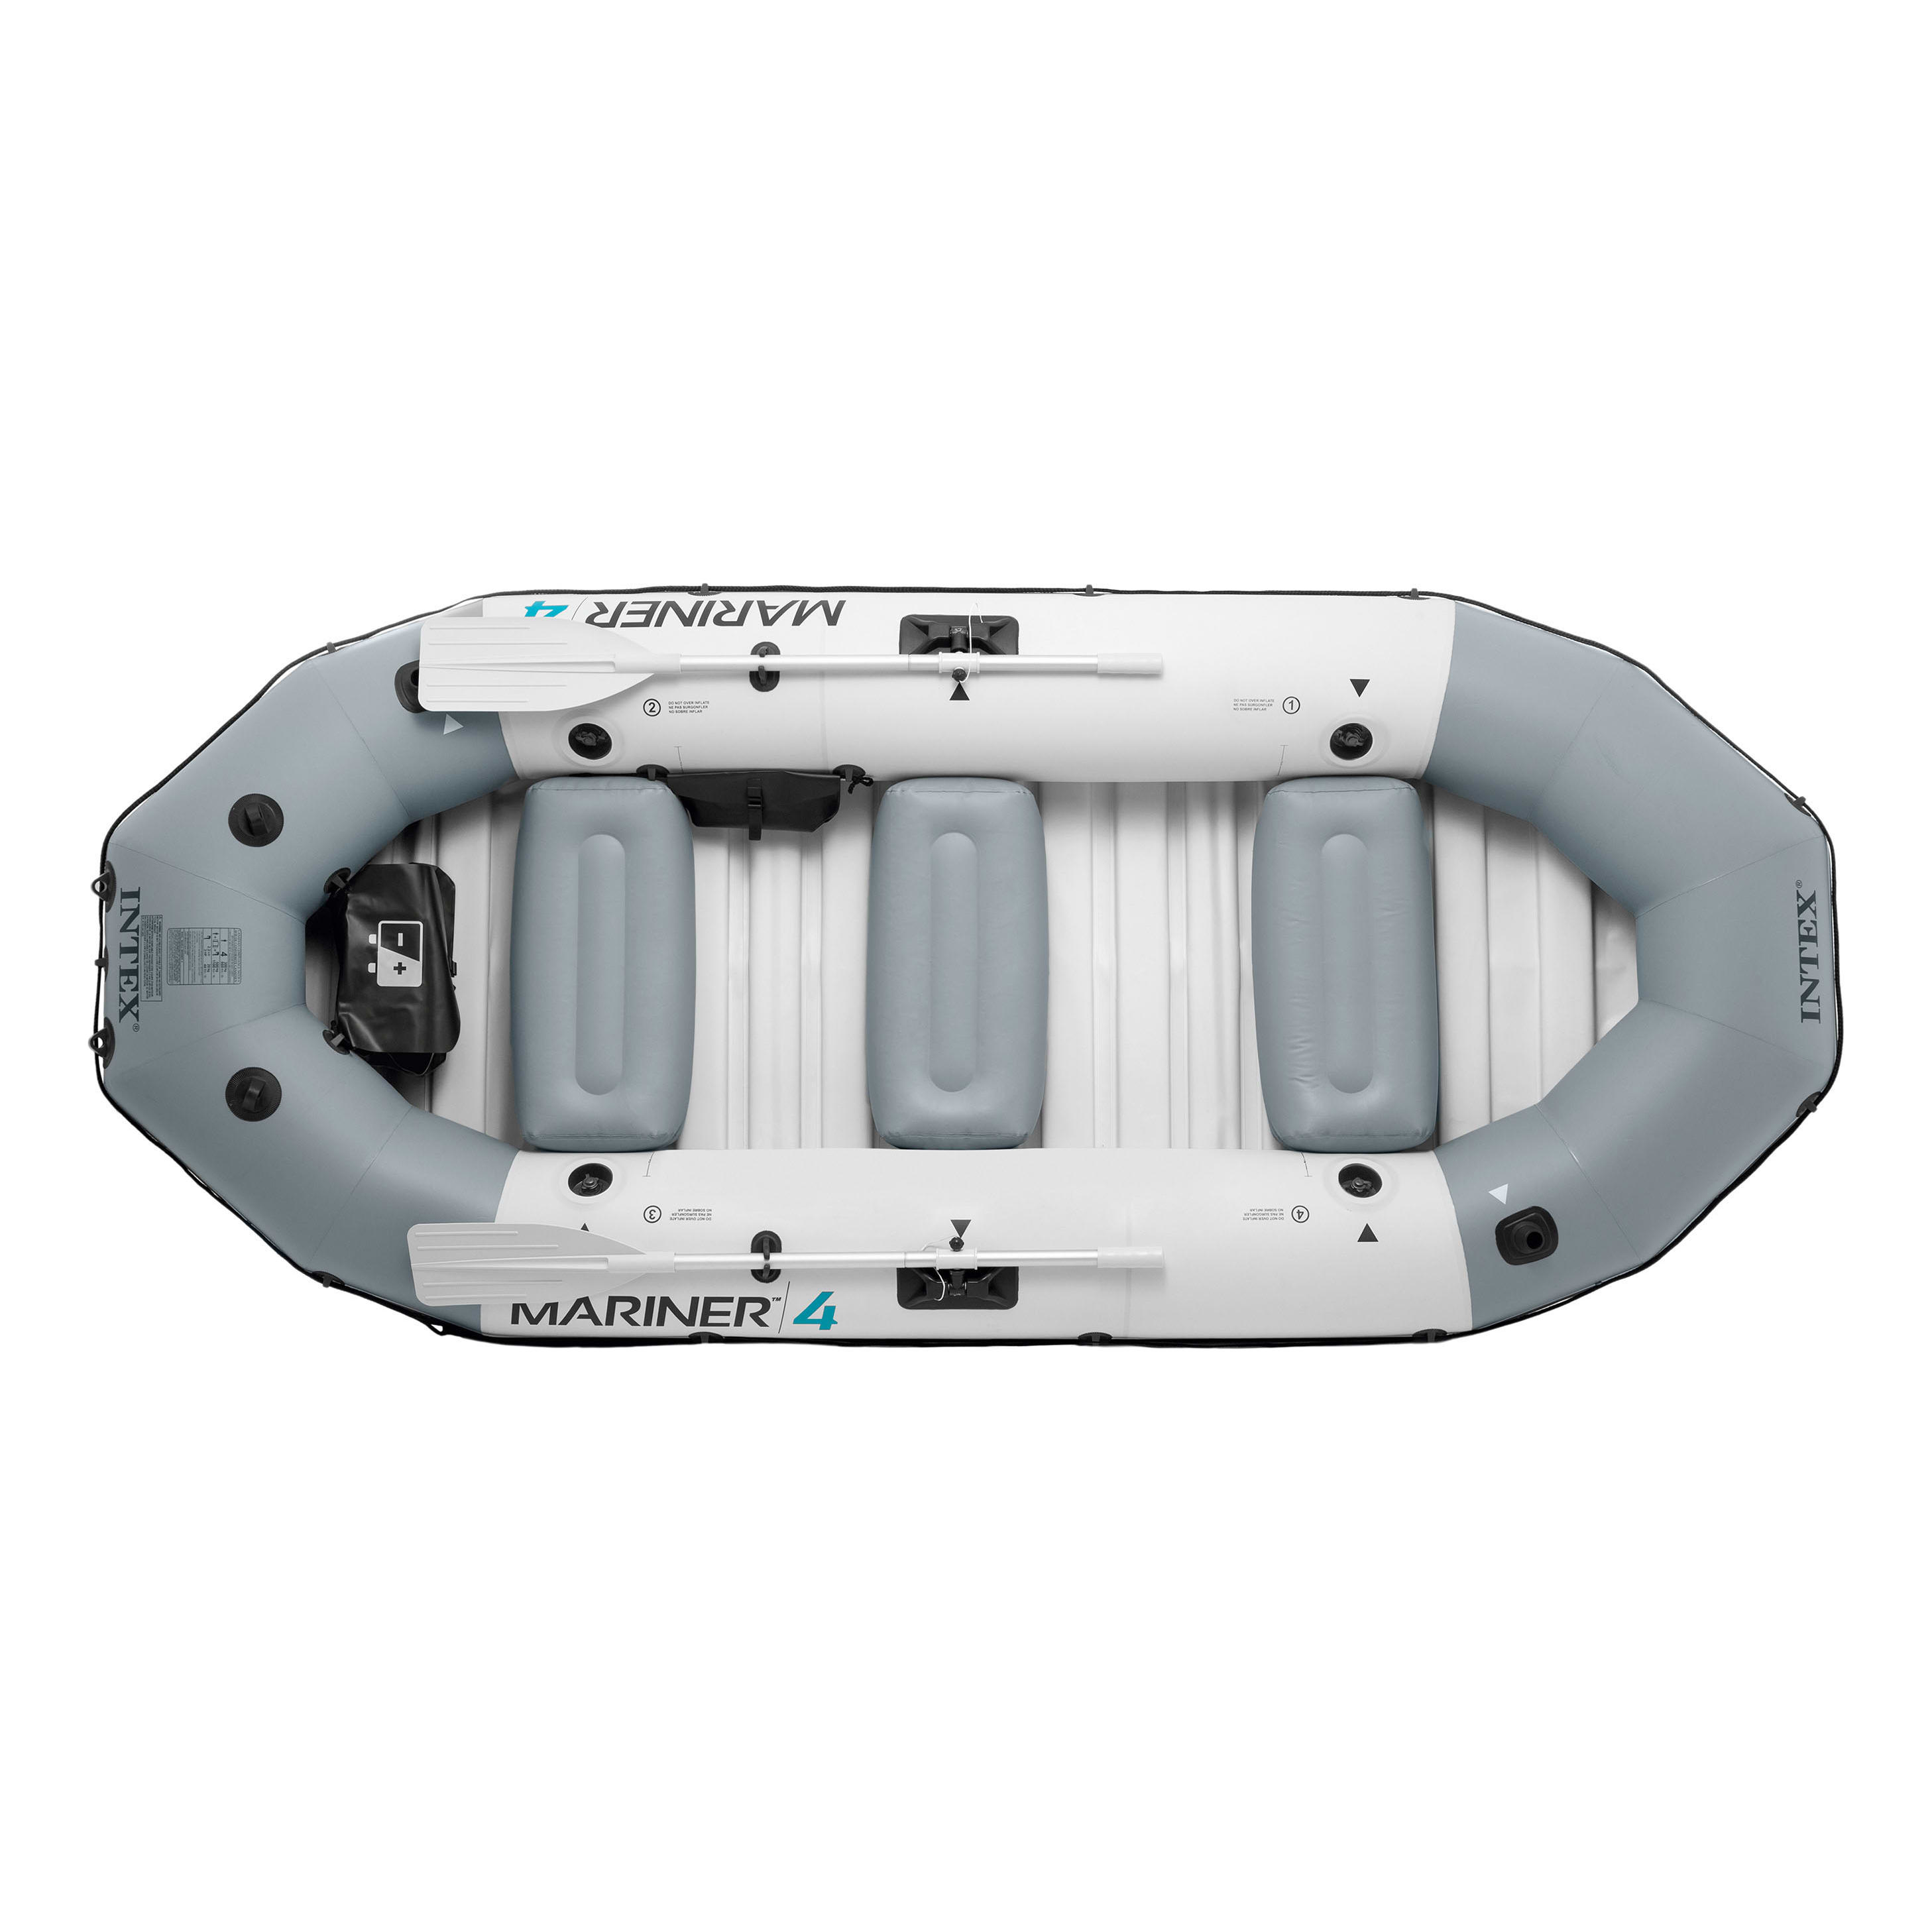 Intex Mariner 4 Inflatable Boat Kit - Top View